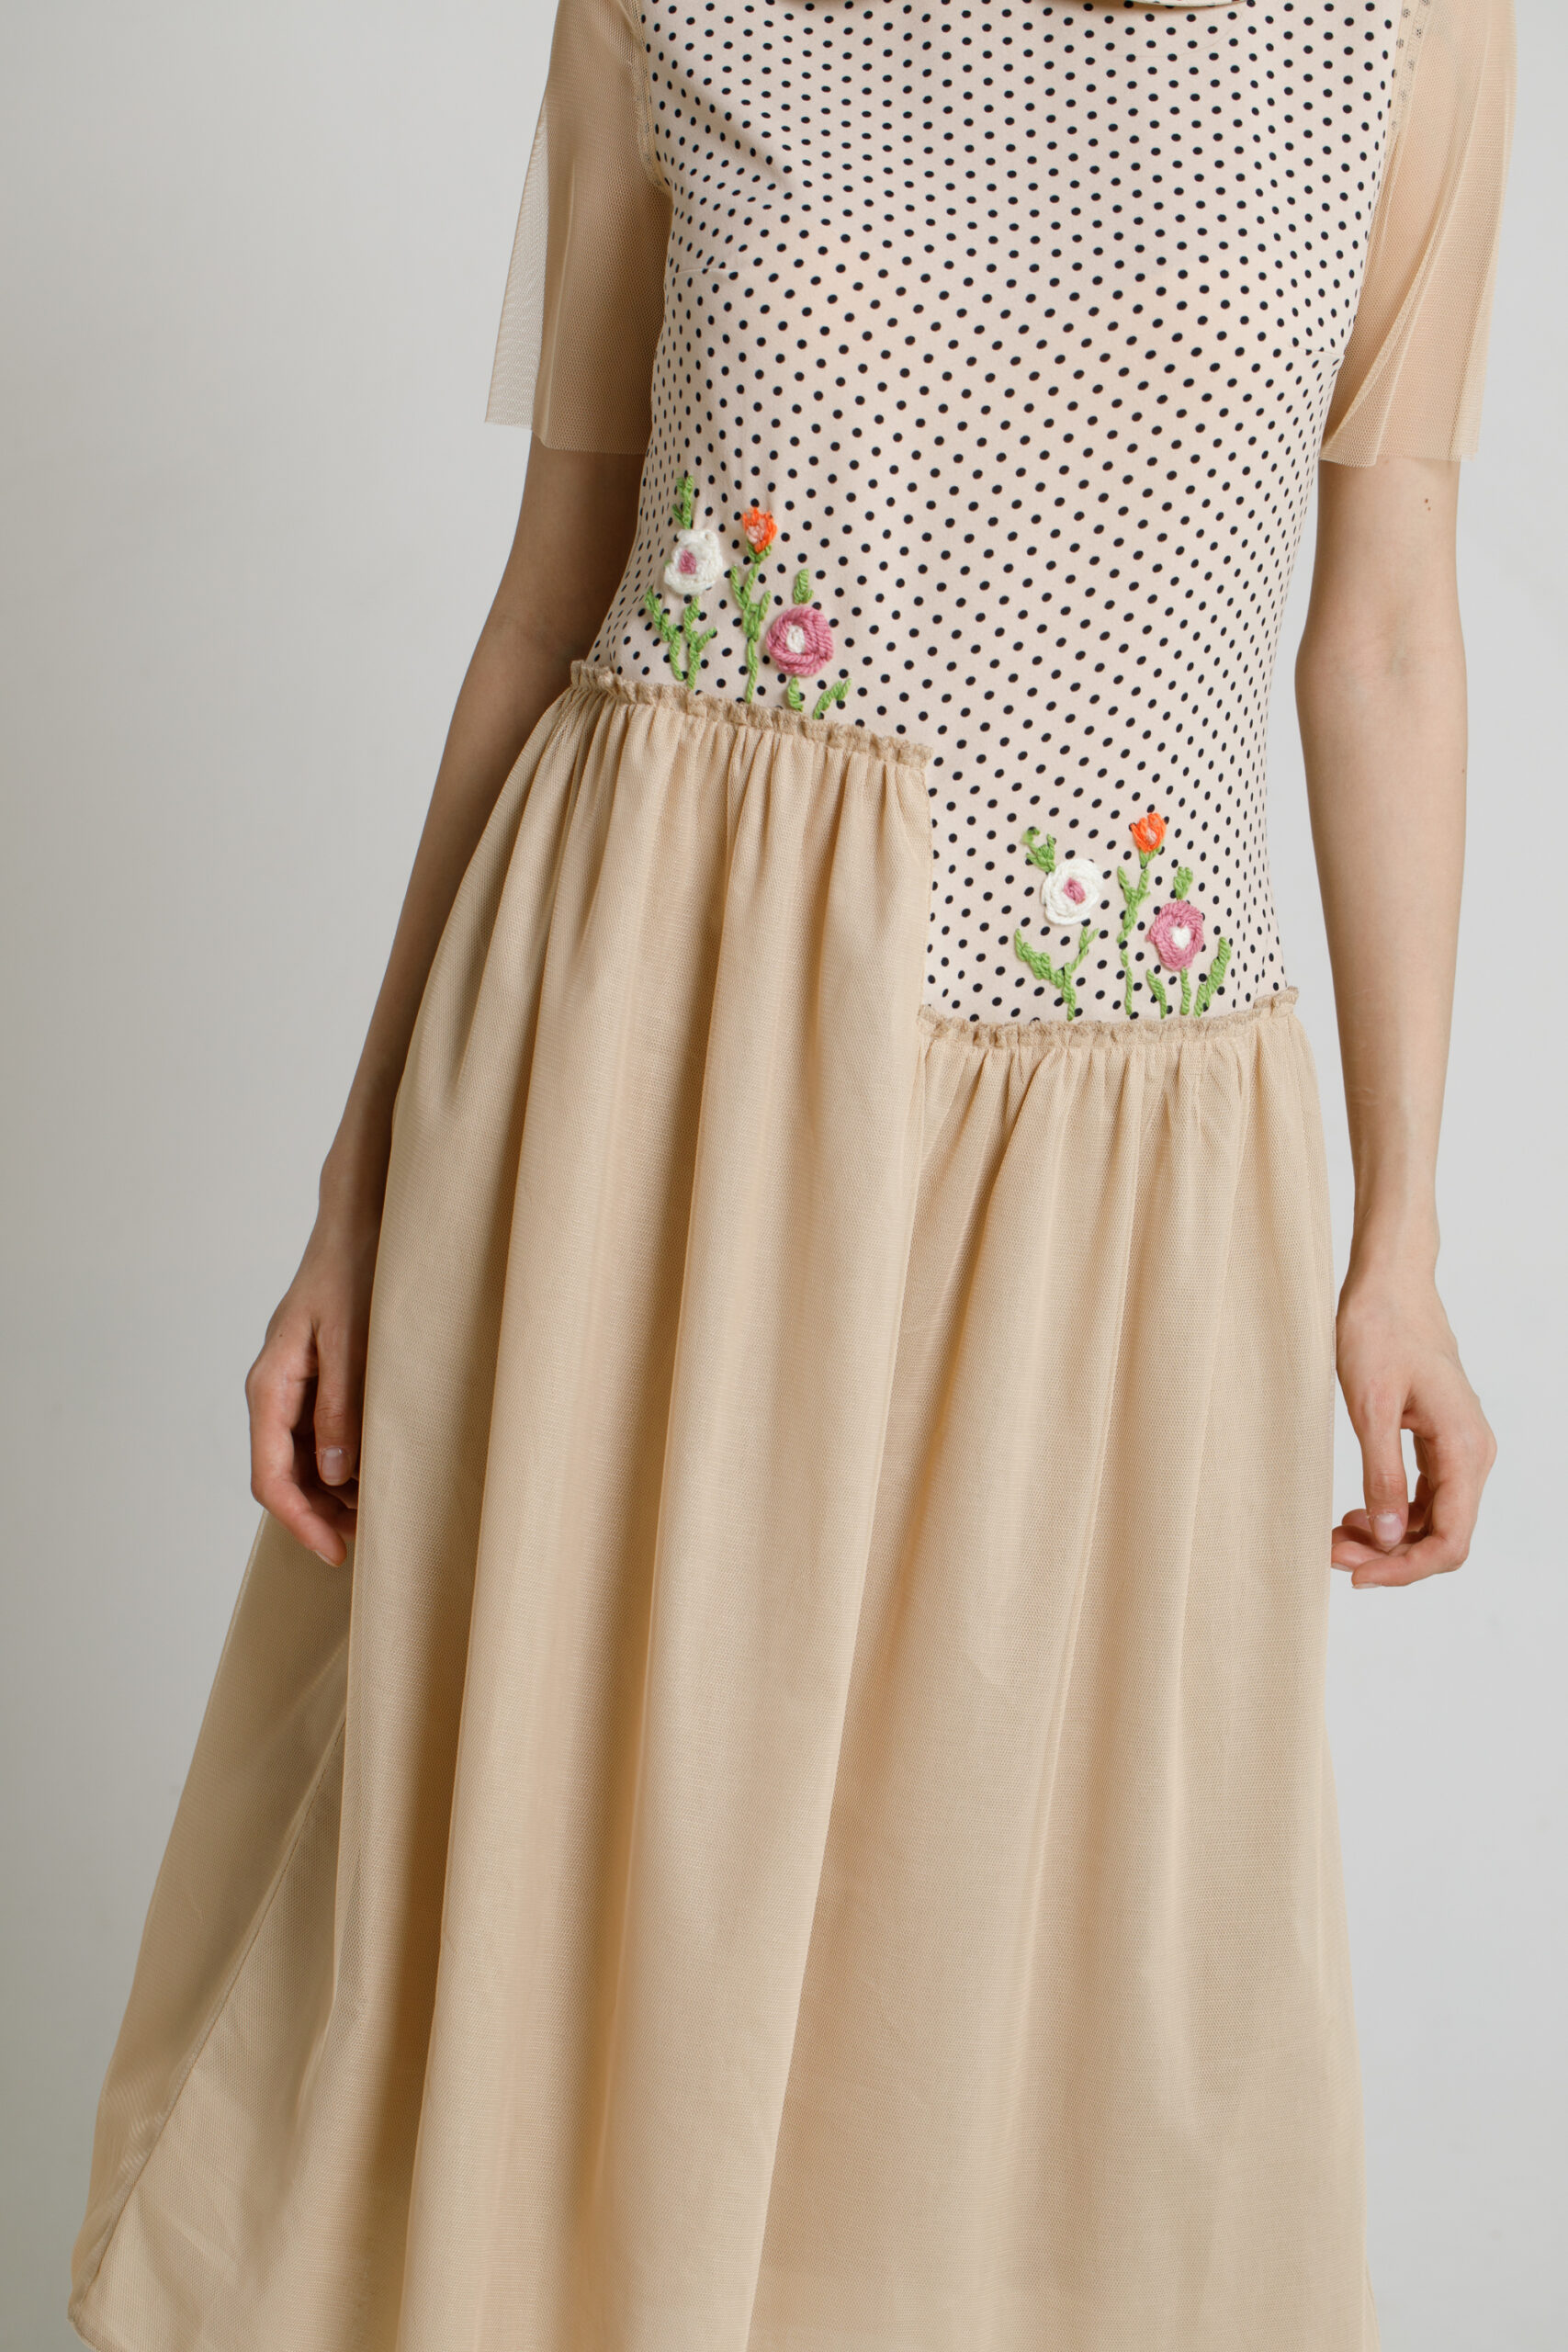 PALMA casual beige asymmetric dress. Natural fabrics, original design, handmade embroidery